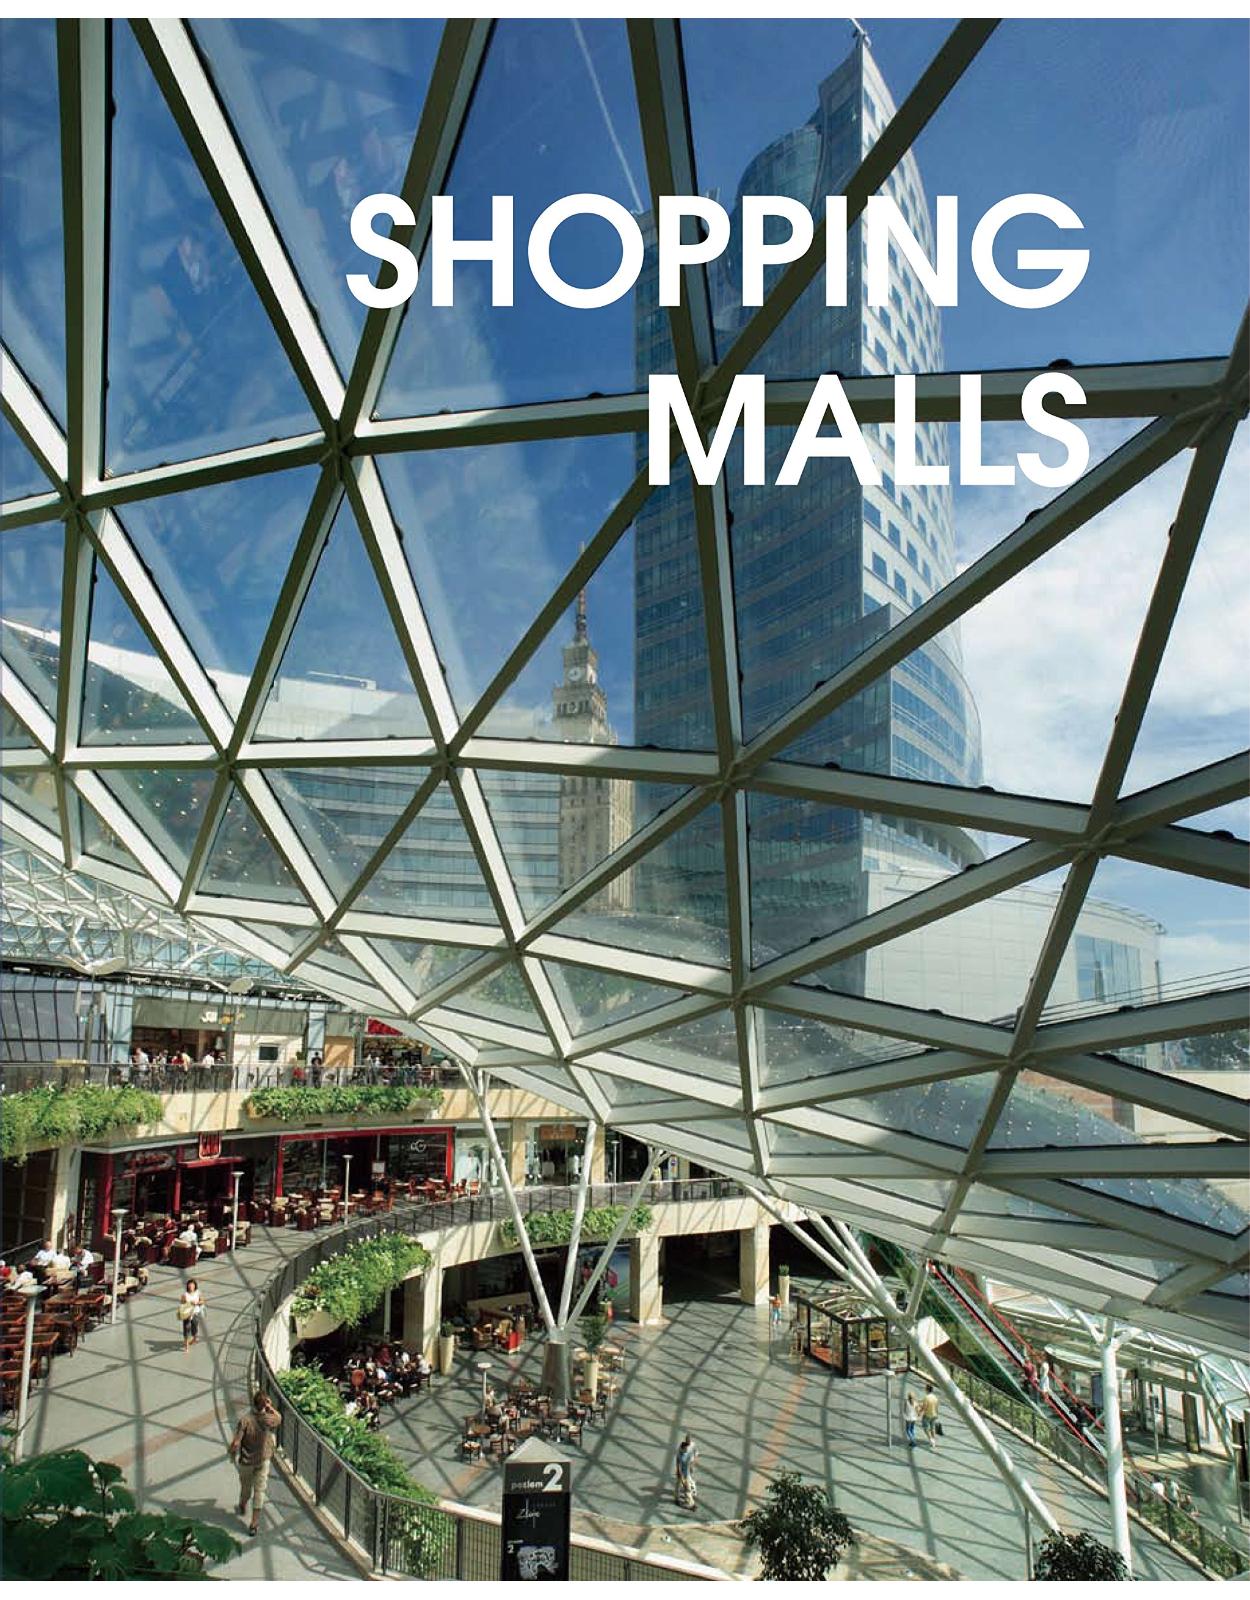 Shopping Malls